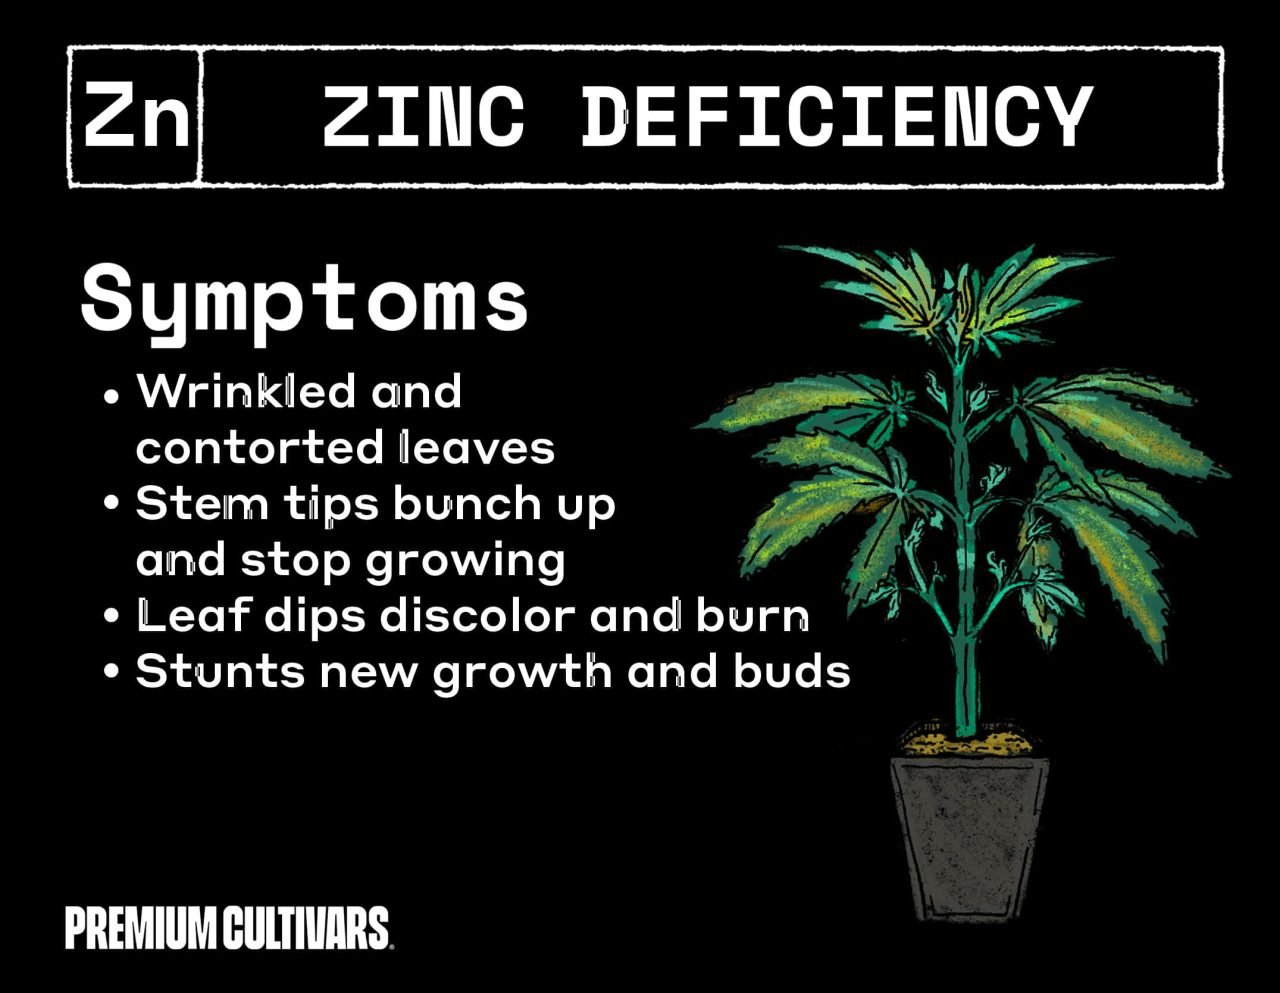 Symptoms of a cannabis zinc deficiency